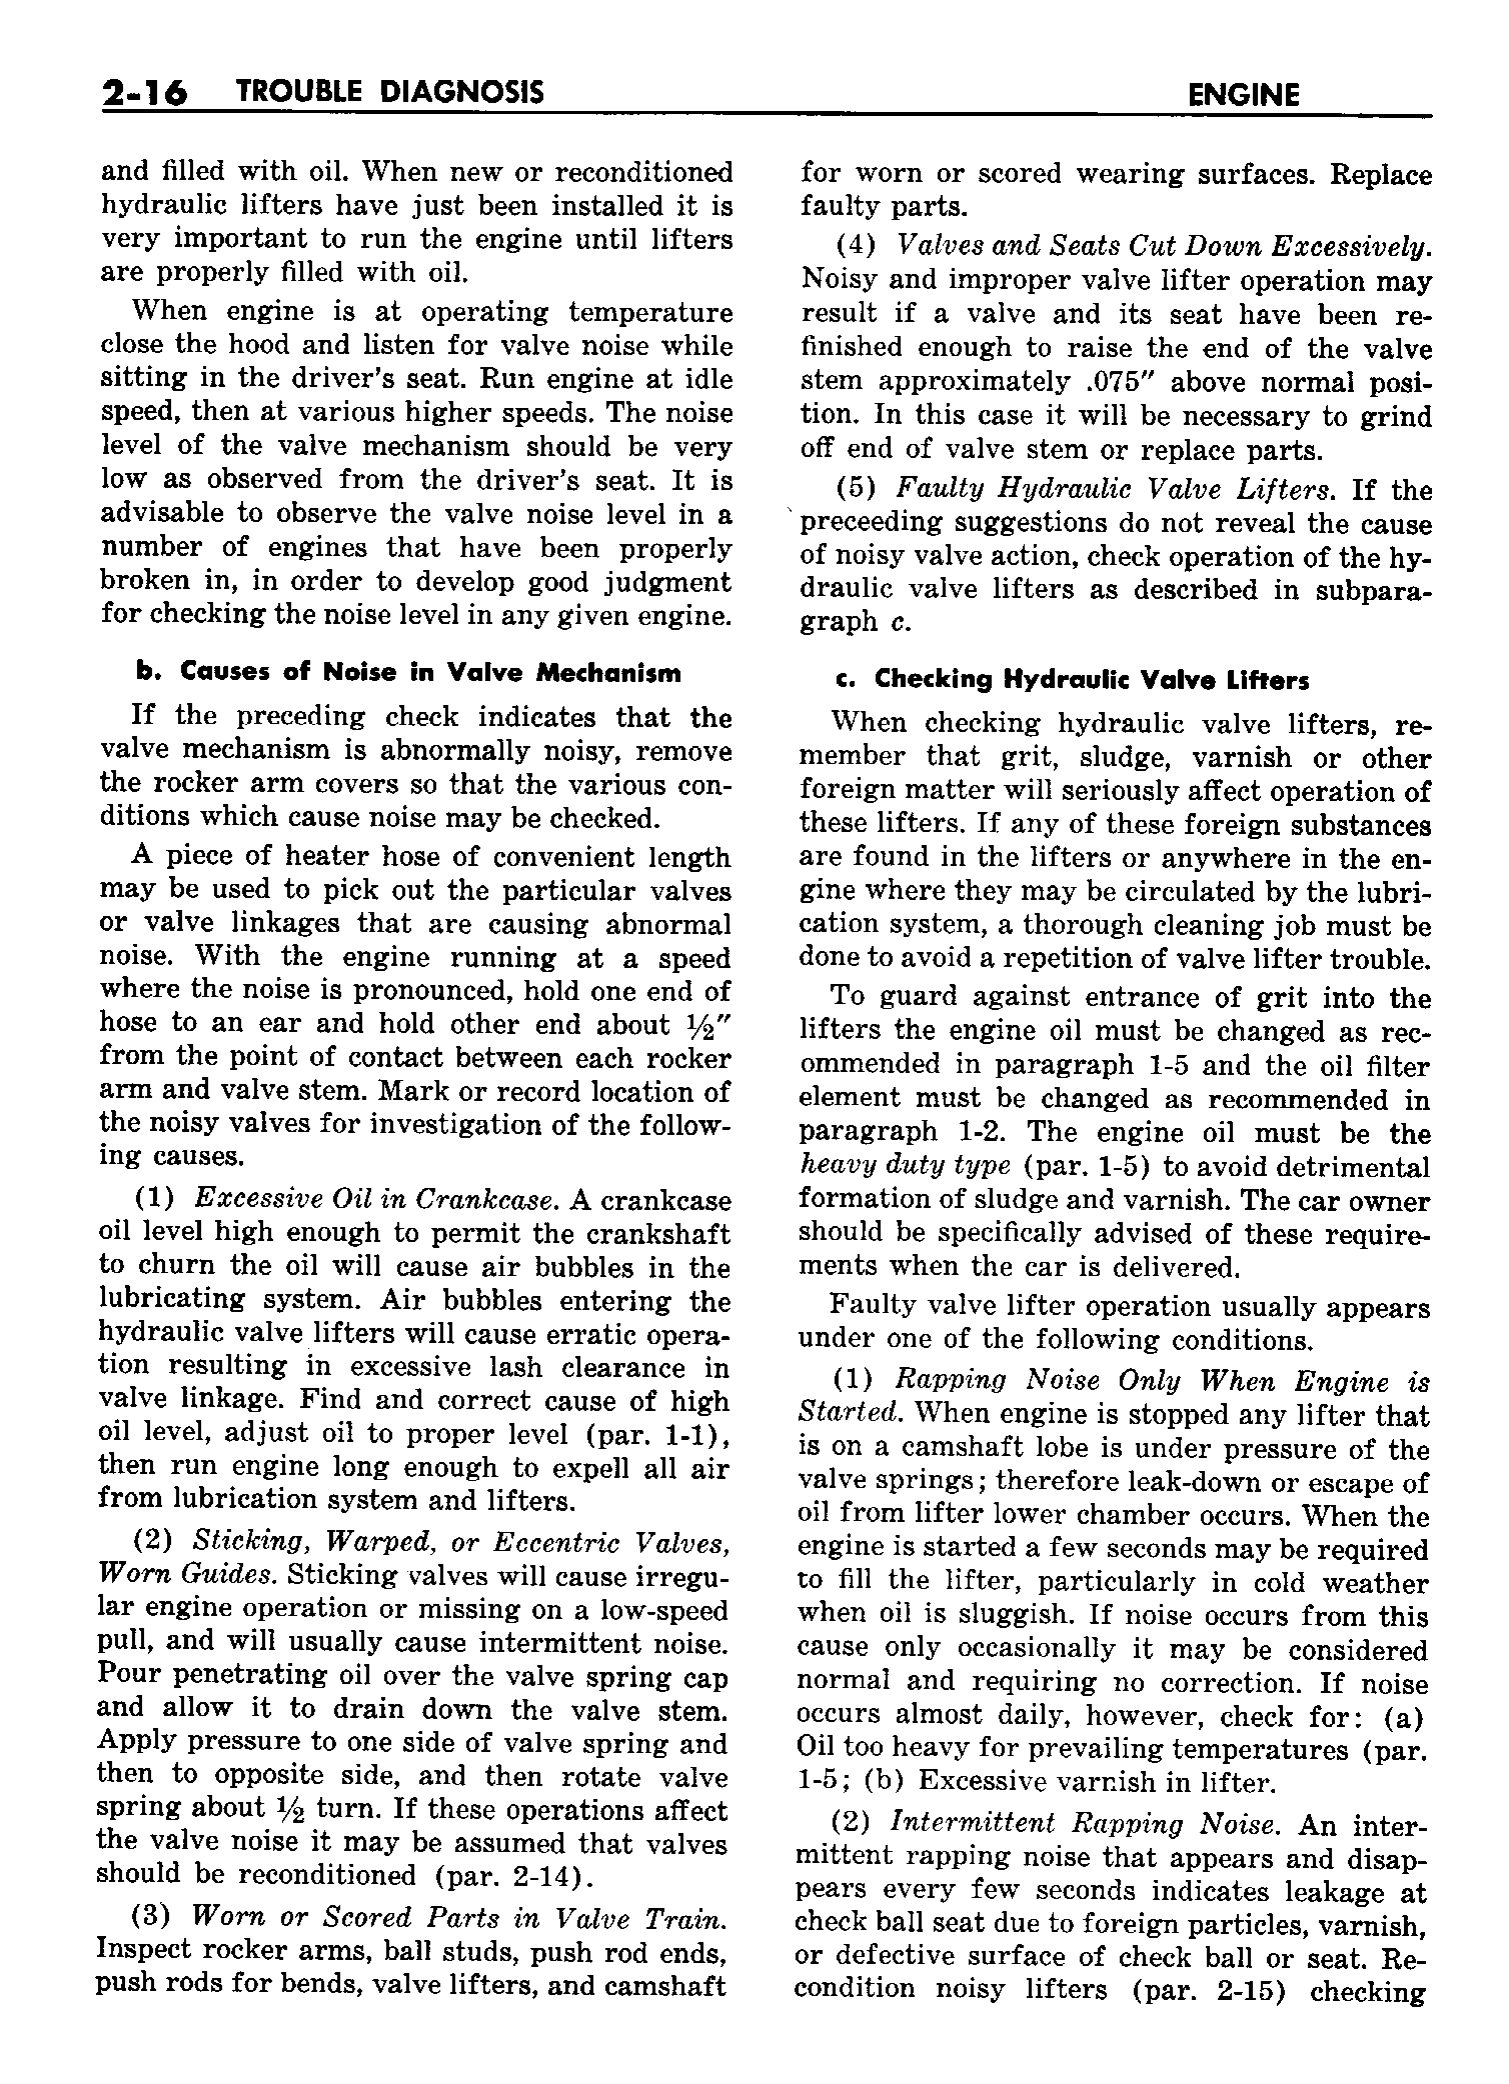 n_03 1958 Buick Shop Manual - Engine_16.jpg